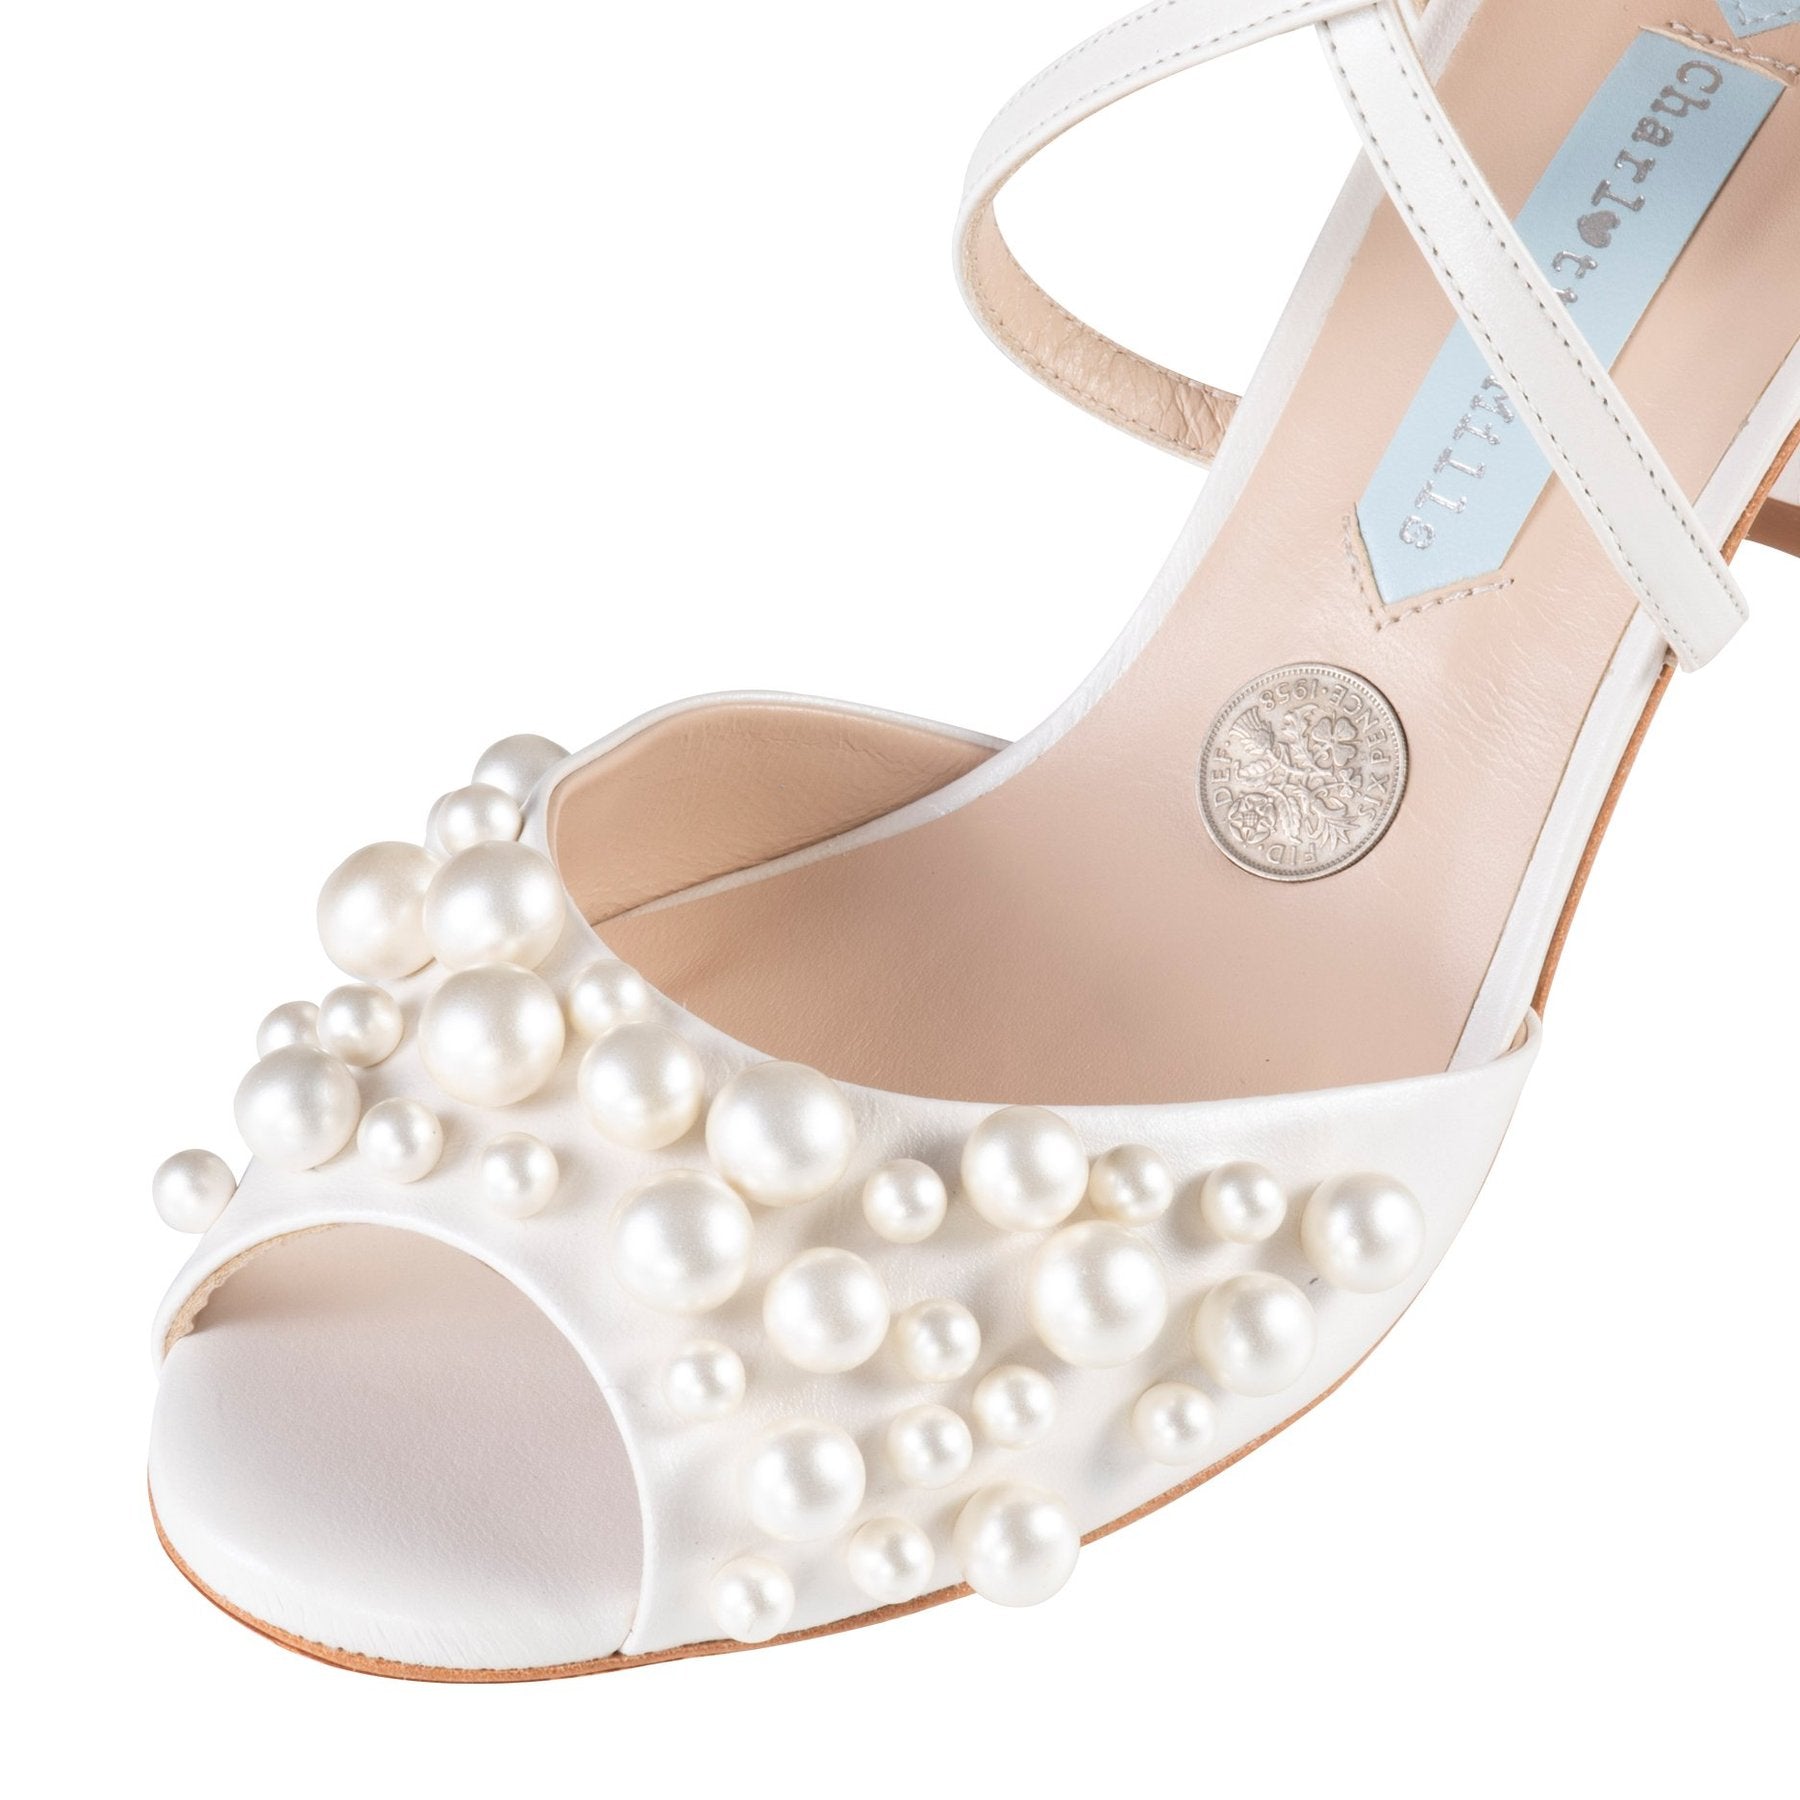 Henri - Ivory Pearl Embellished Bridal Block Heel